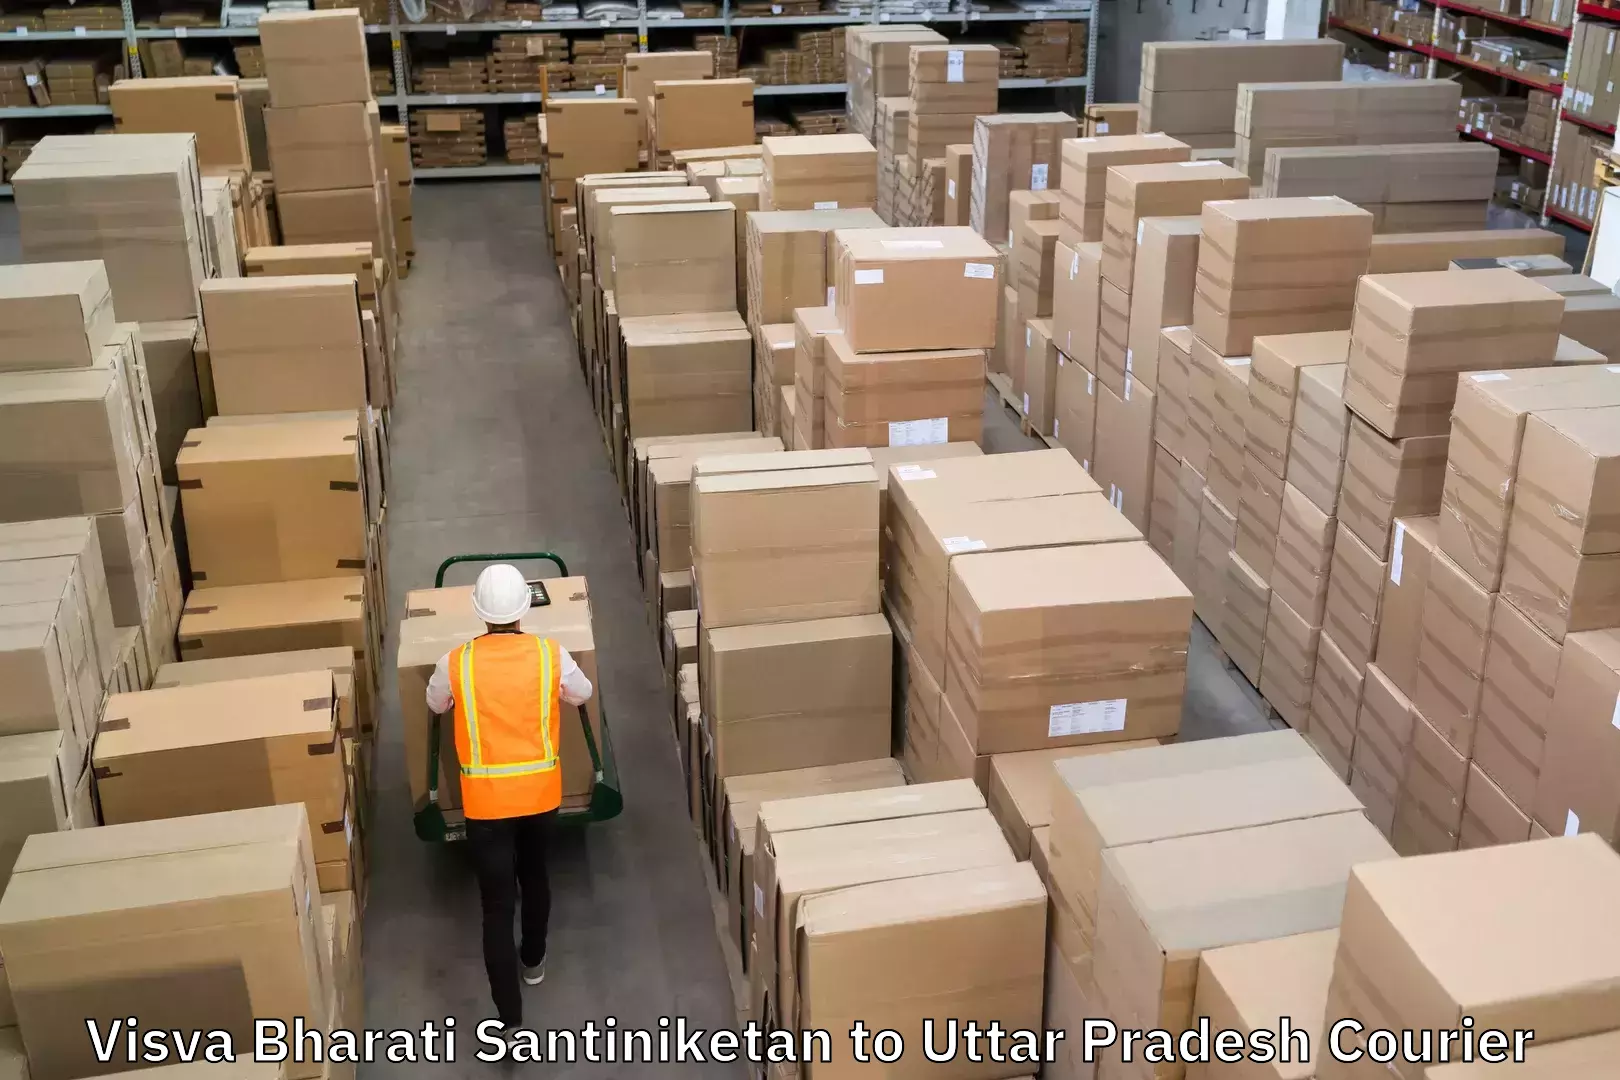 Delivery service partnership Visva Bharati Santiniketan to Uttar Pradesh